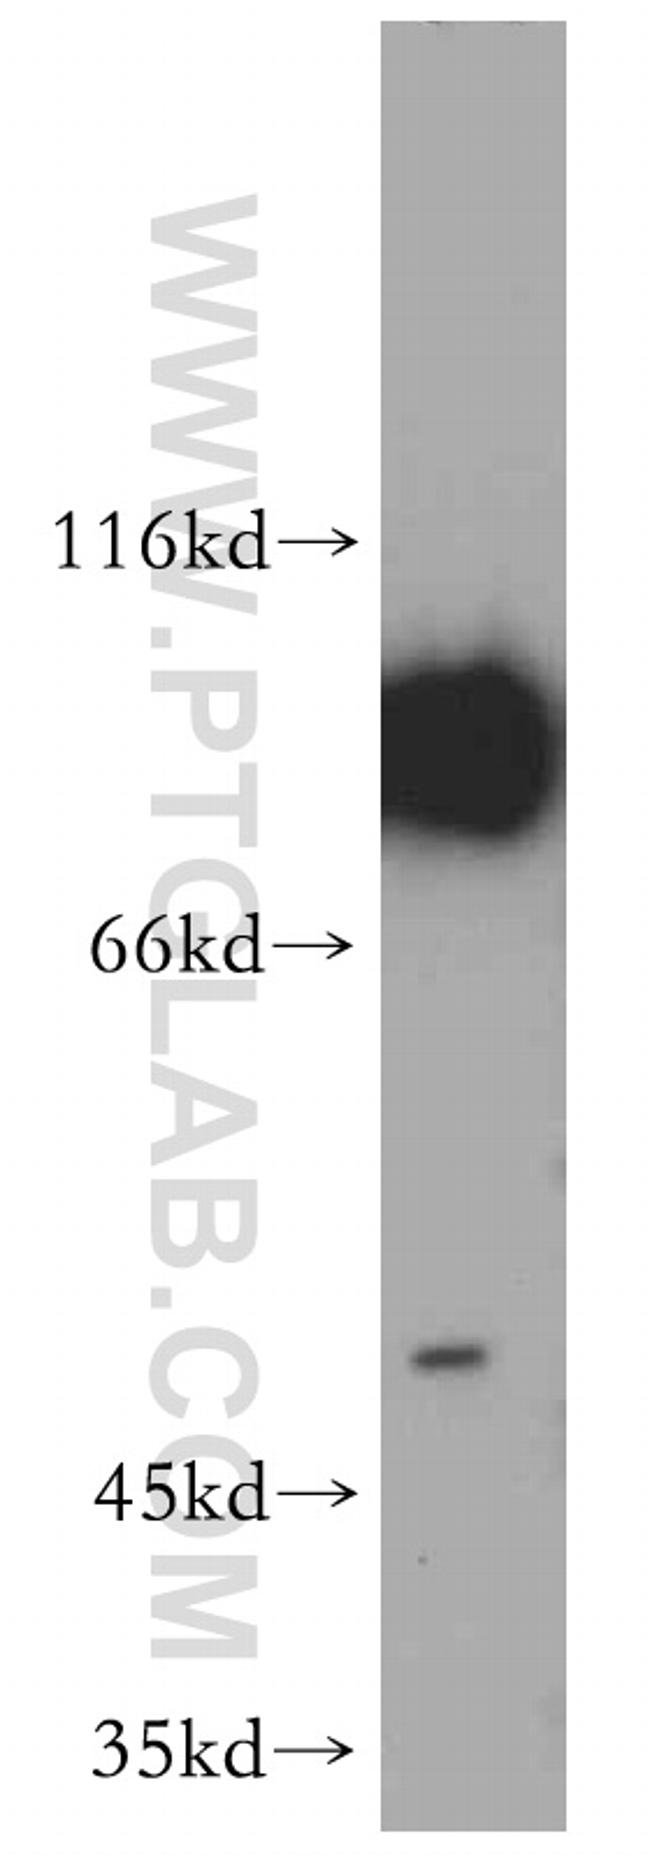 NBS1 Antibody in Western Blot (WB)